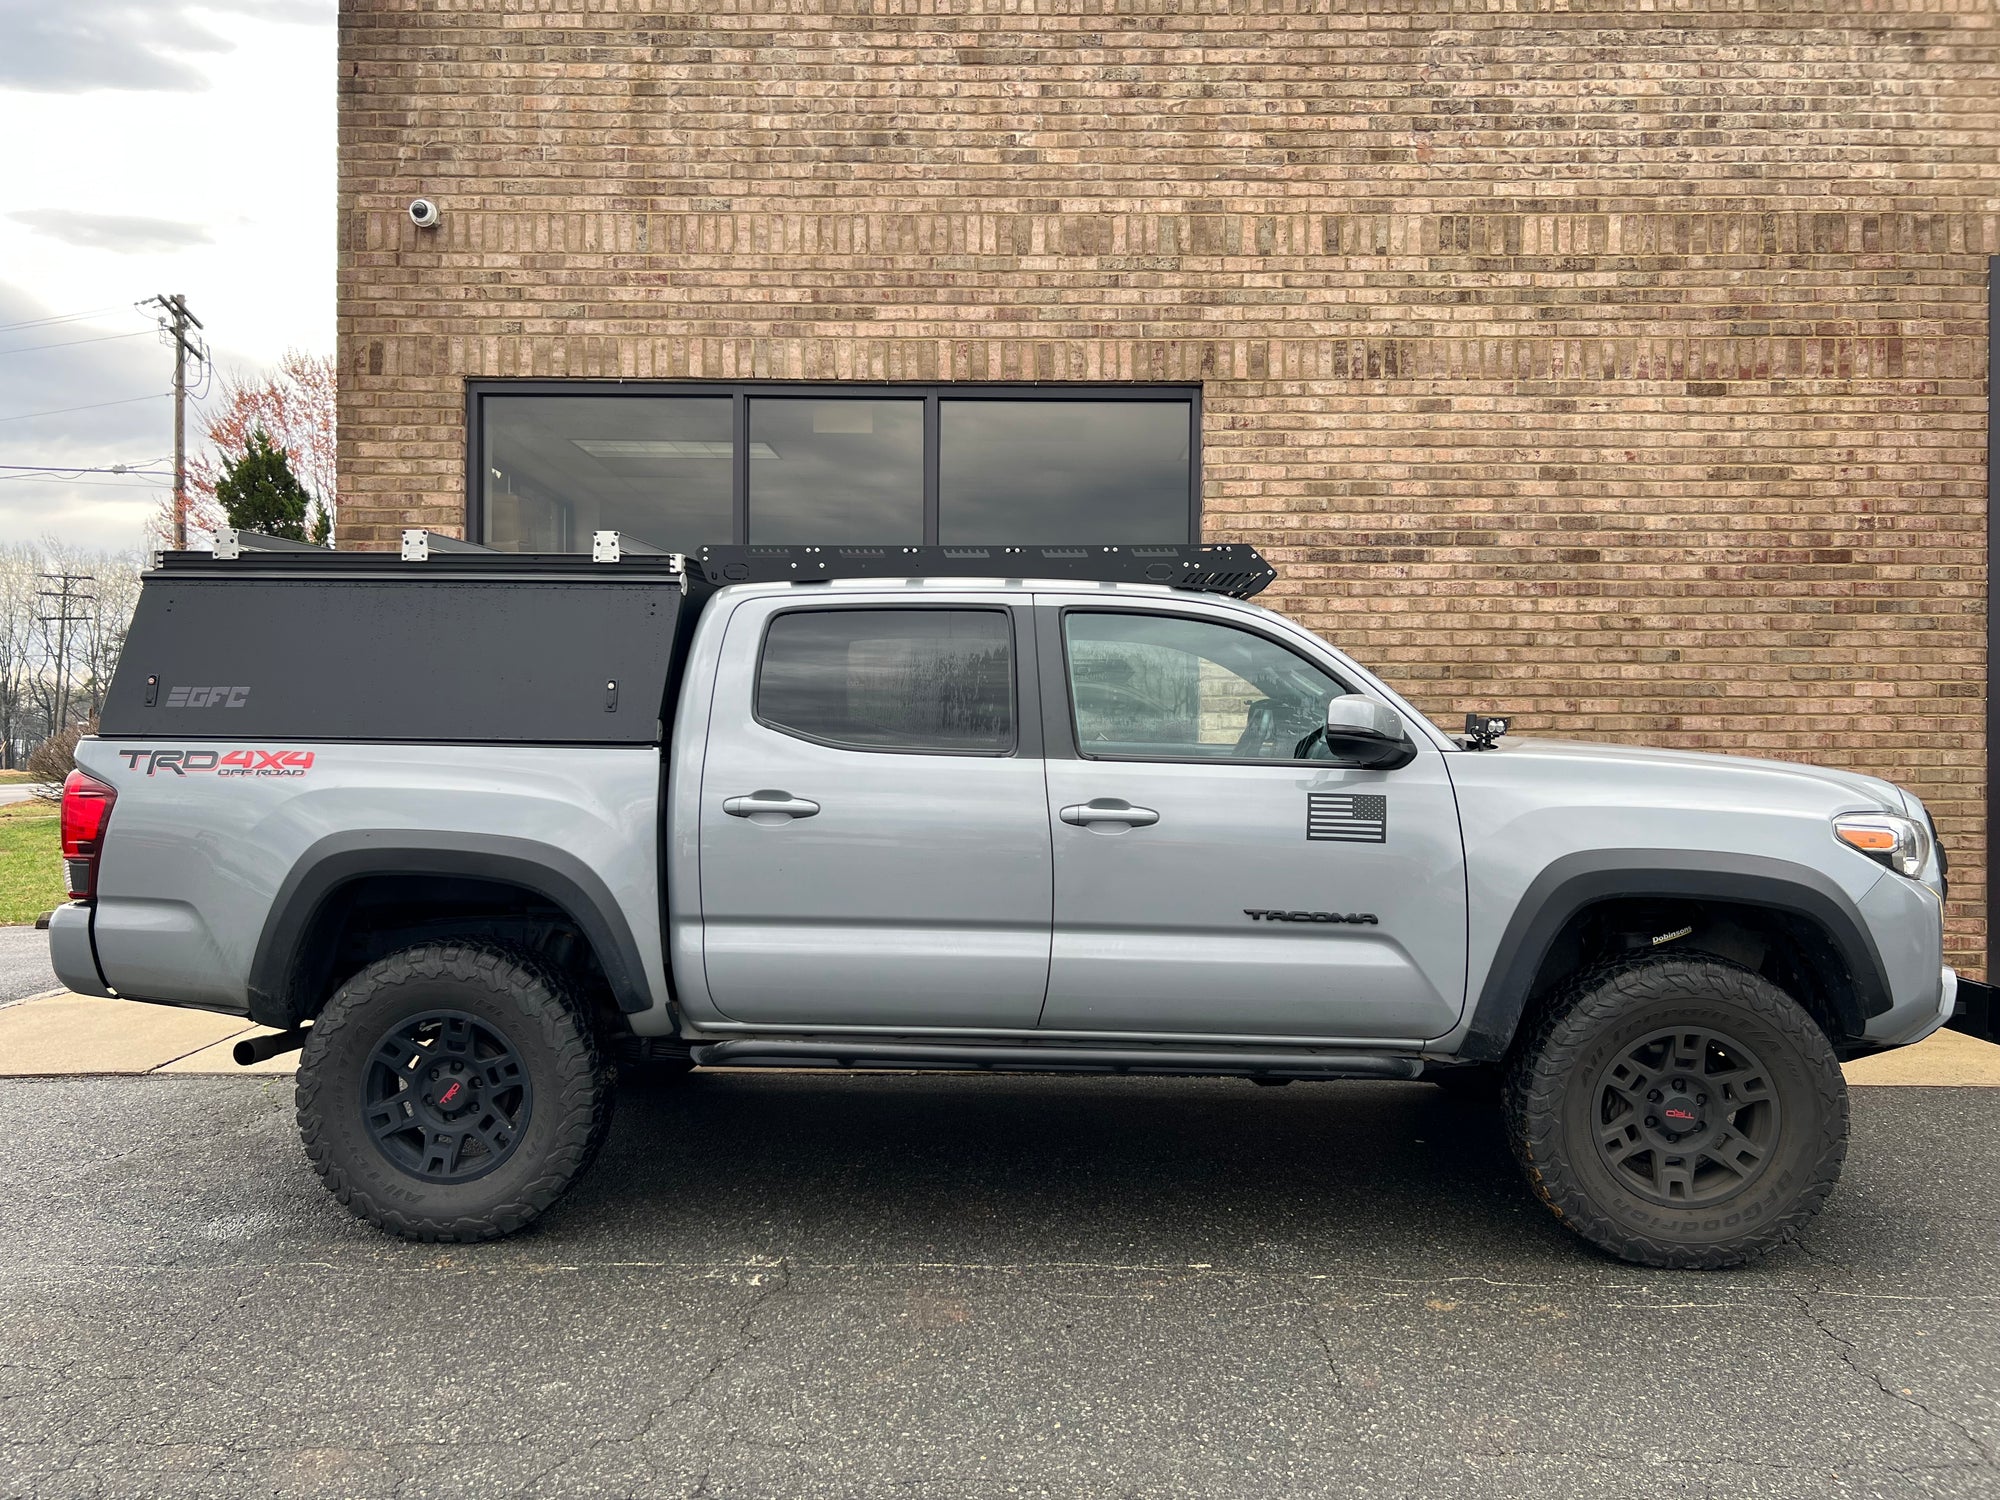 2018 Toyota Tacoma Topper - Build #41